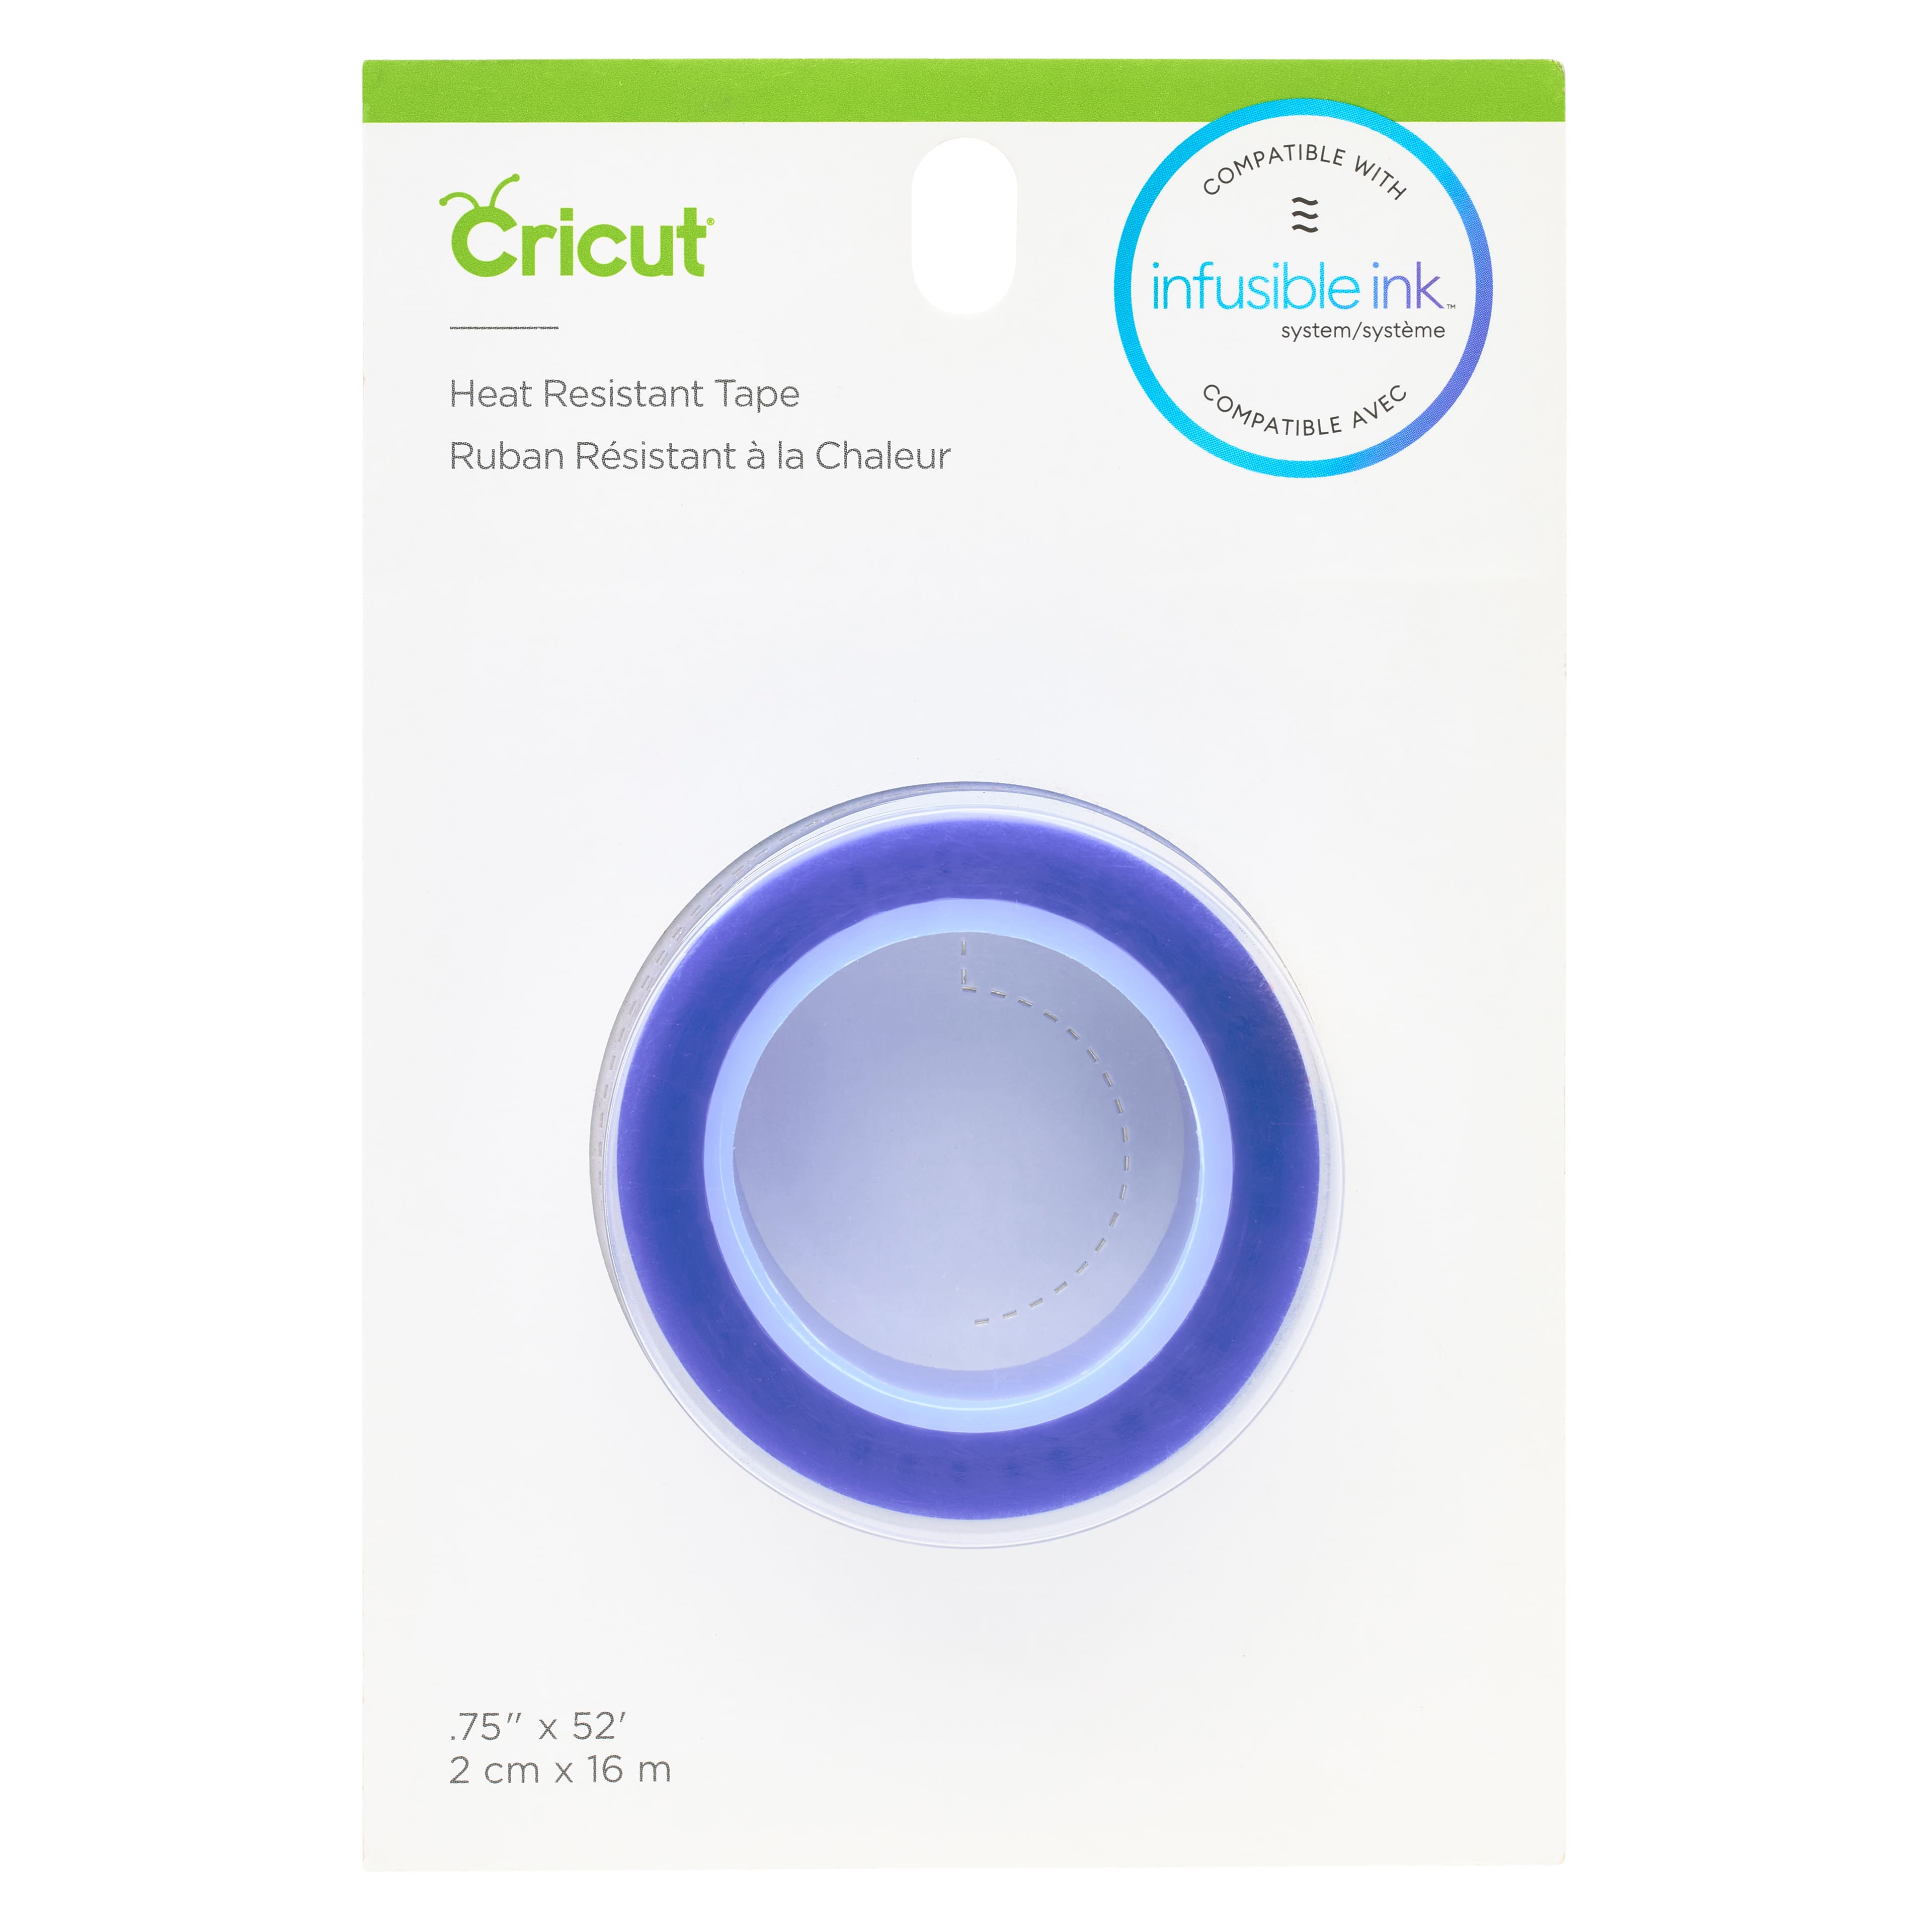 Find Cricut® Heat Resistant Tape at Michaels